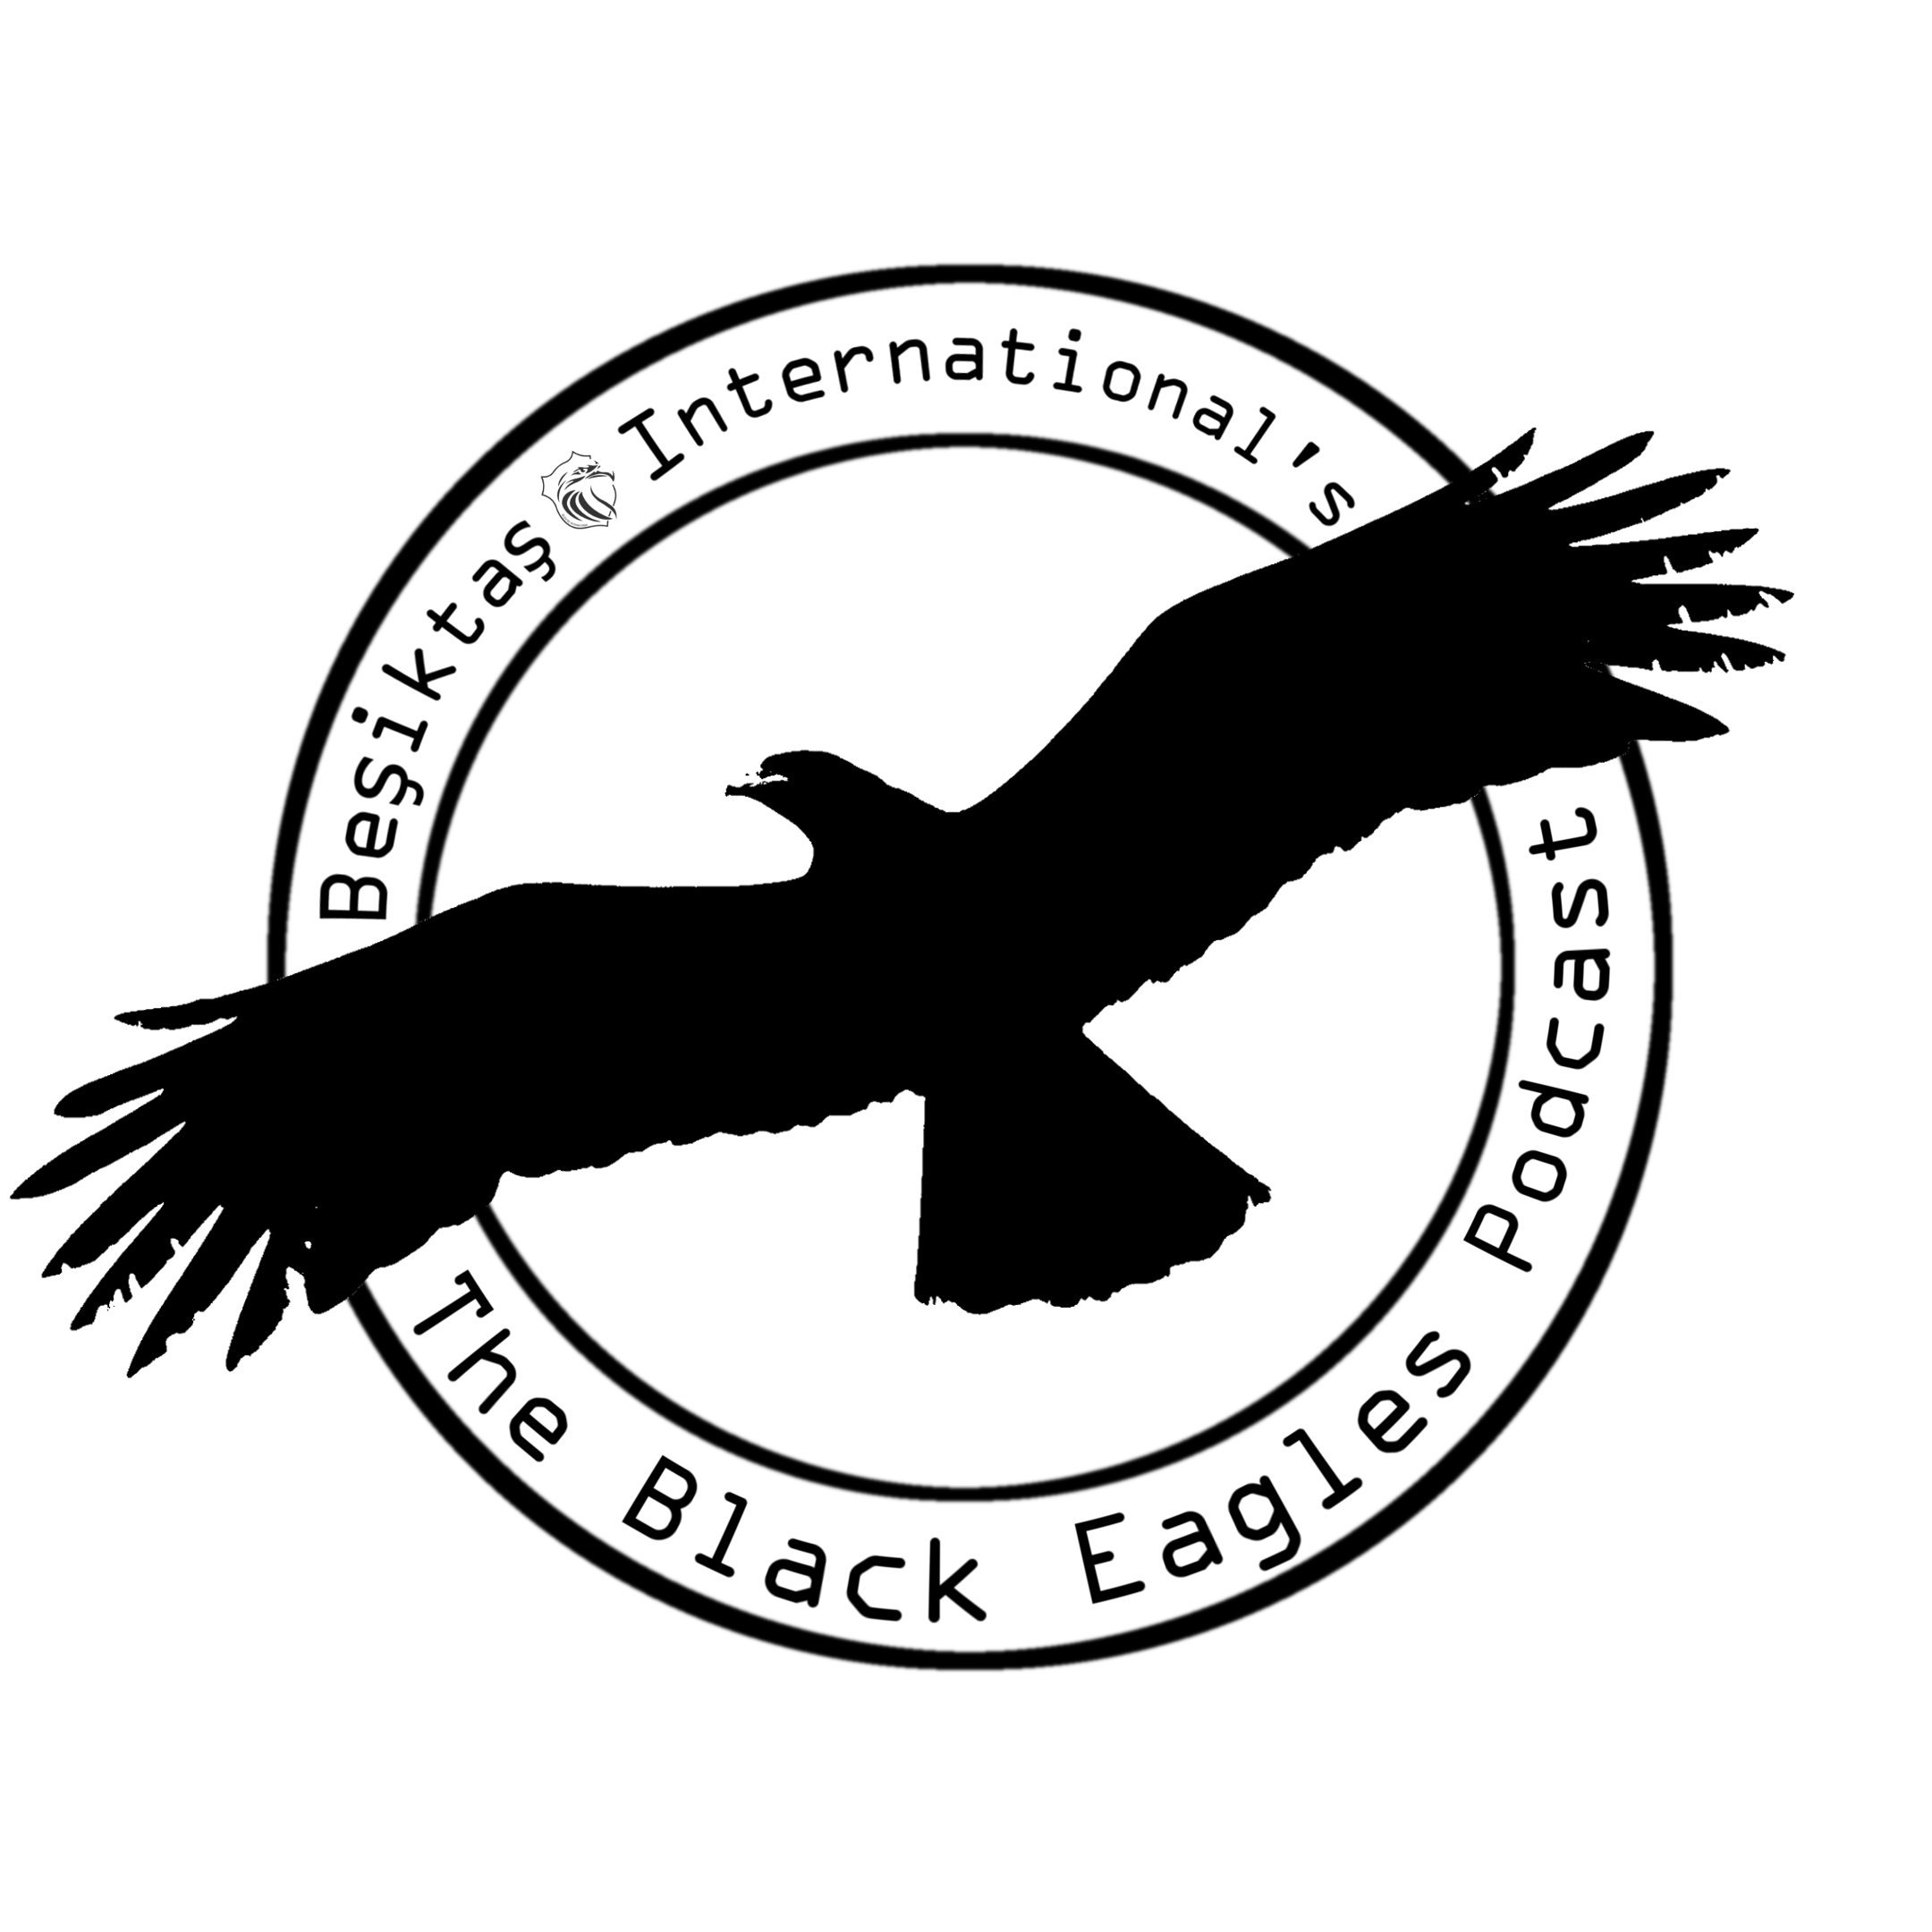 The Black Eagles Podcast - Episode 19 (August 20th, 2018) - MATCH REVIEW -  Erzurumspor vs. Beşiktaş, Loris Karius, Marco Fabián, & much more!